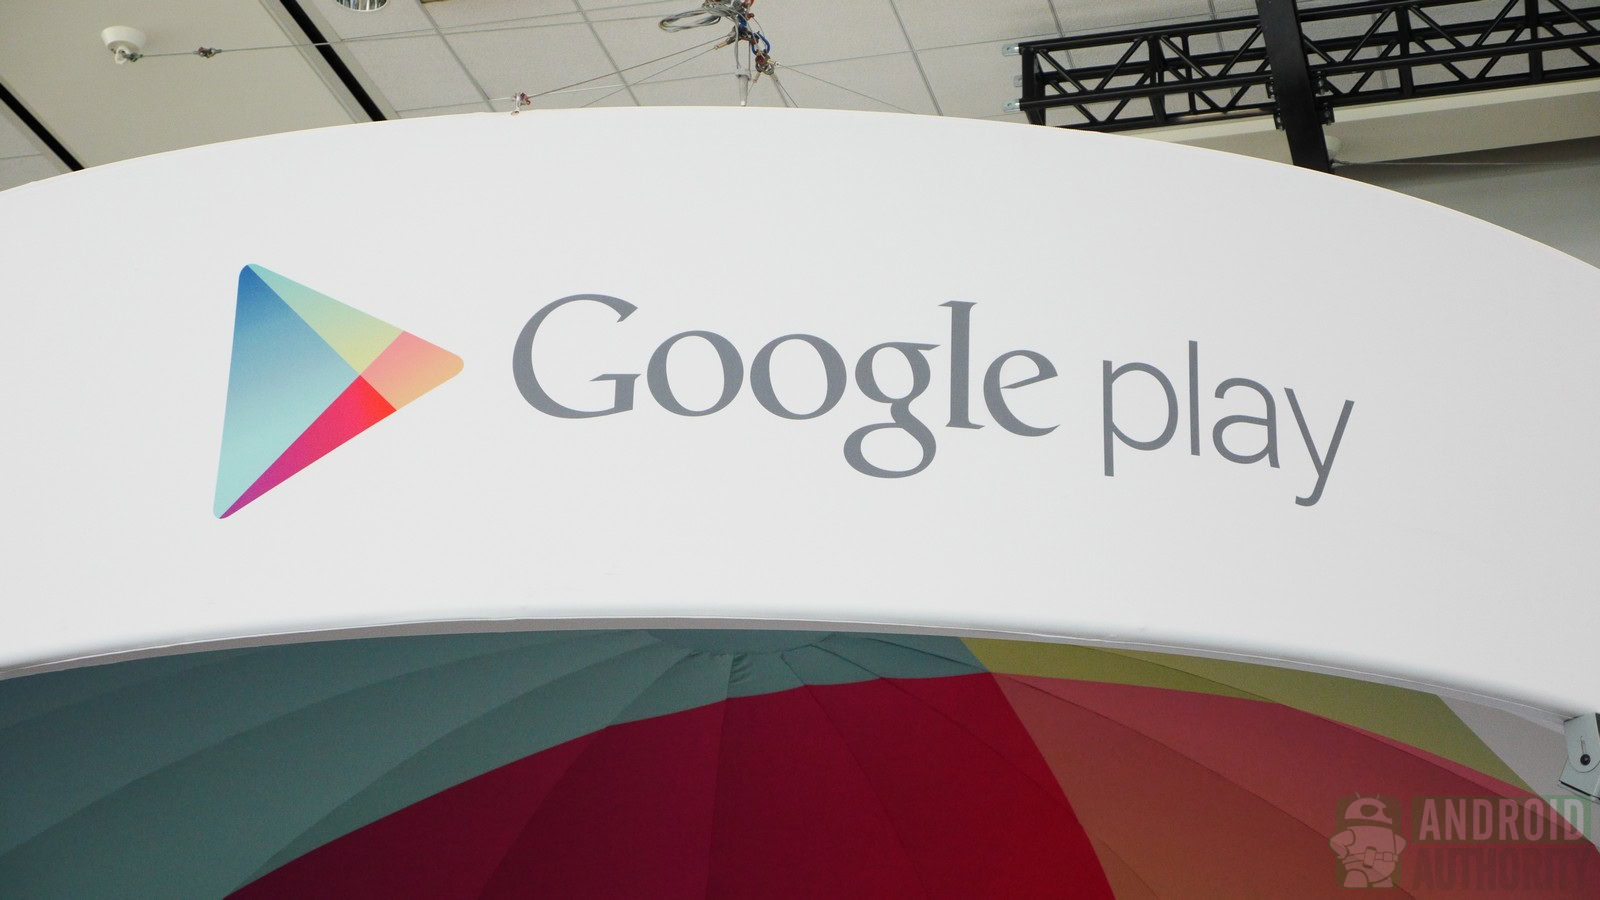 Google-IO-2013 Google Play logo 91600 aa